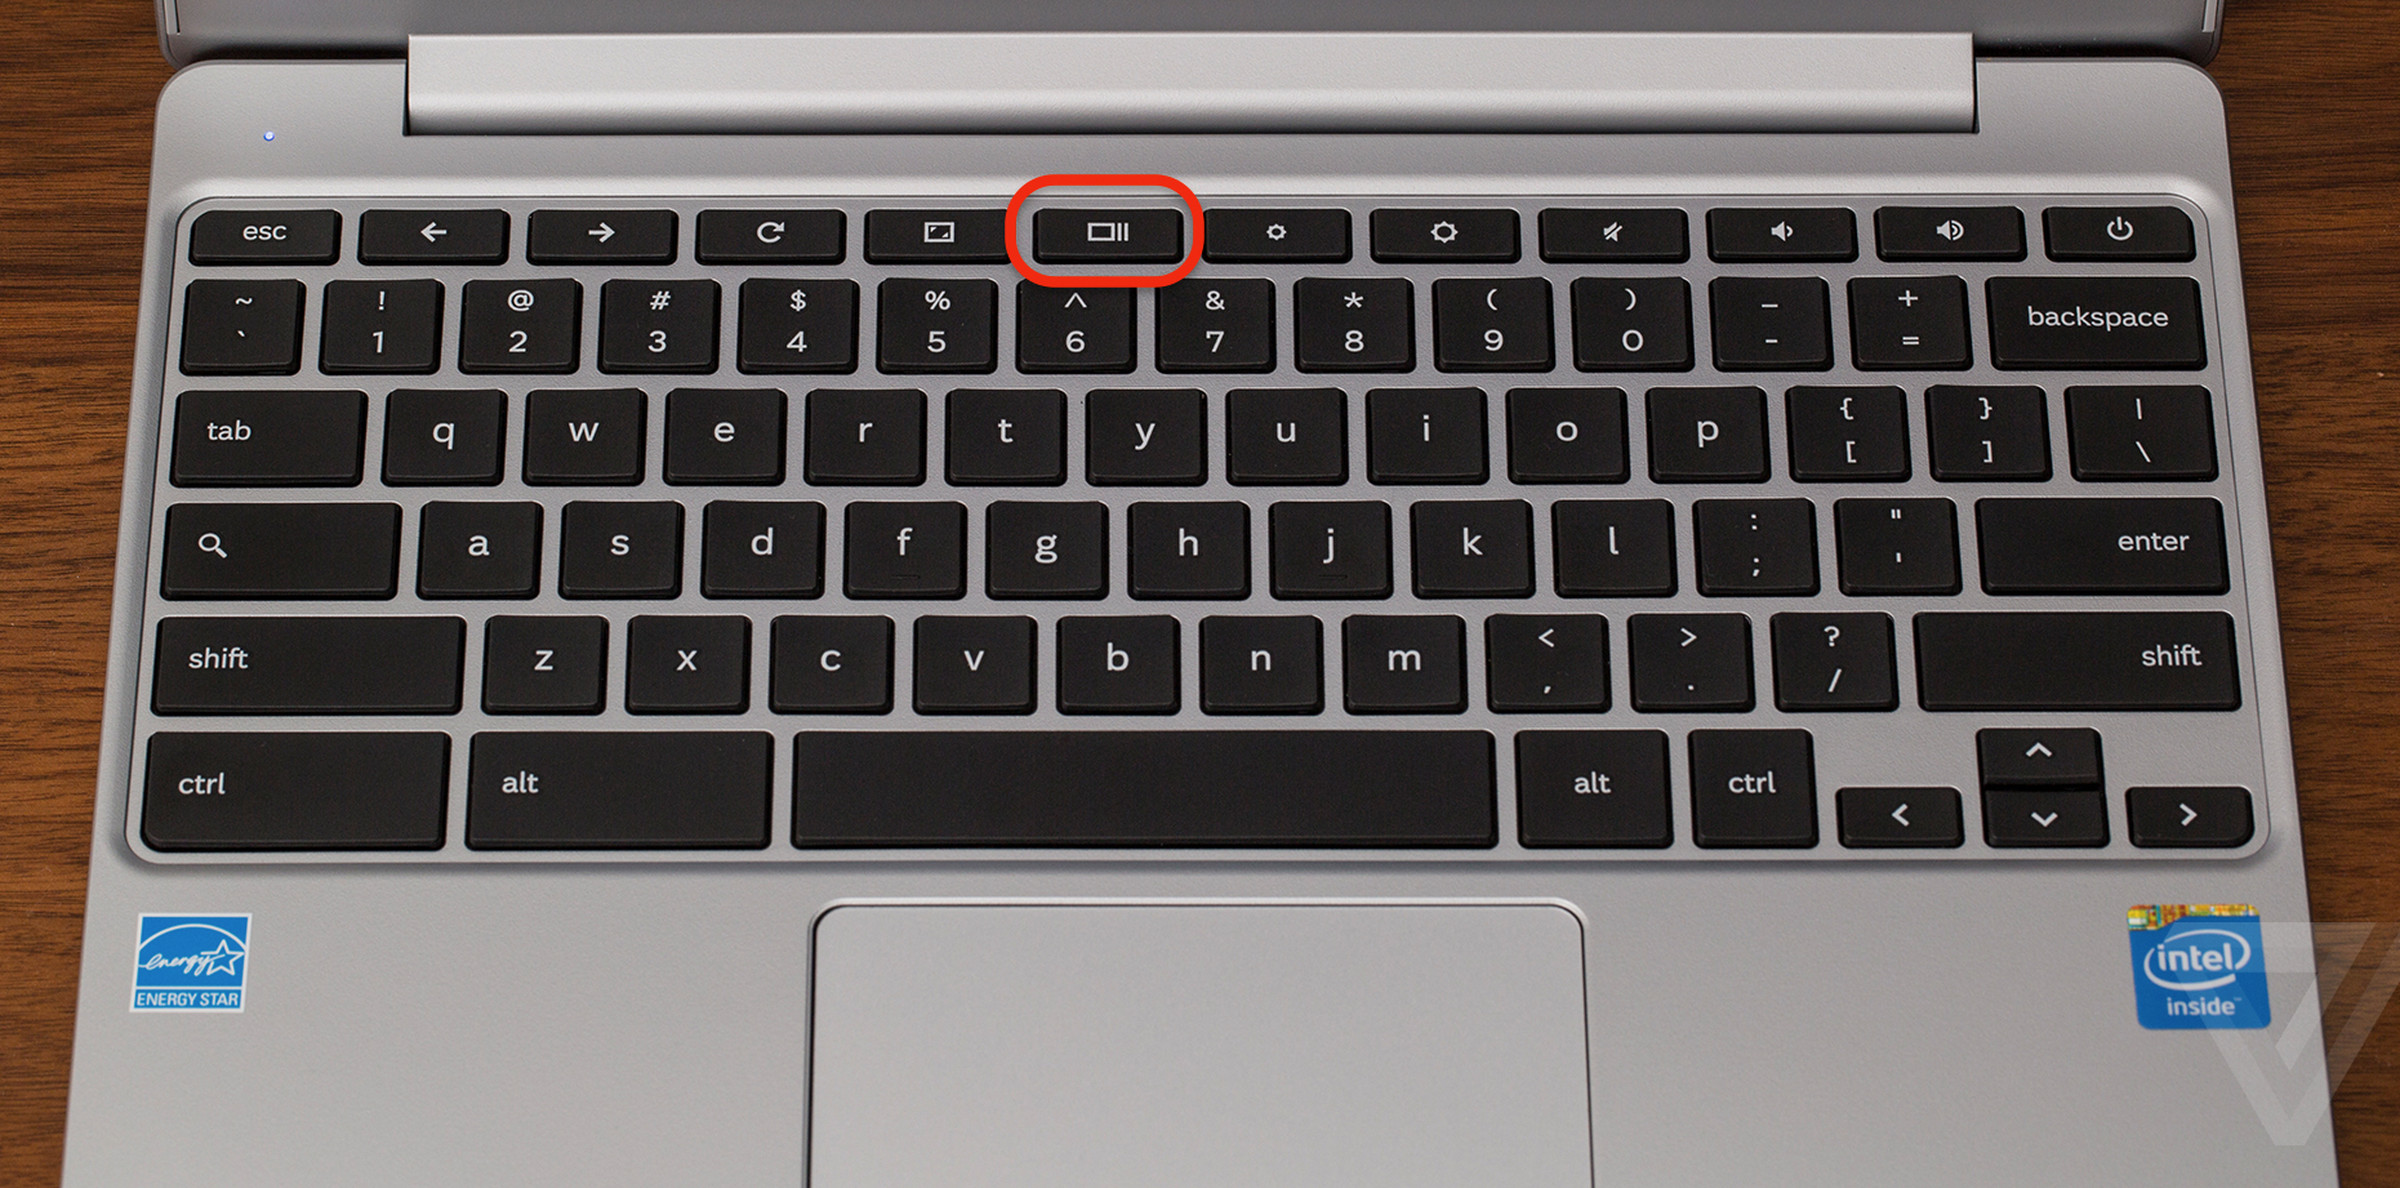 Chromebook showing “show windows” key